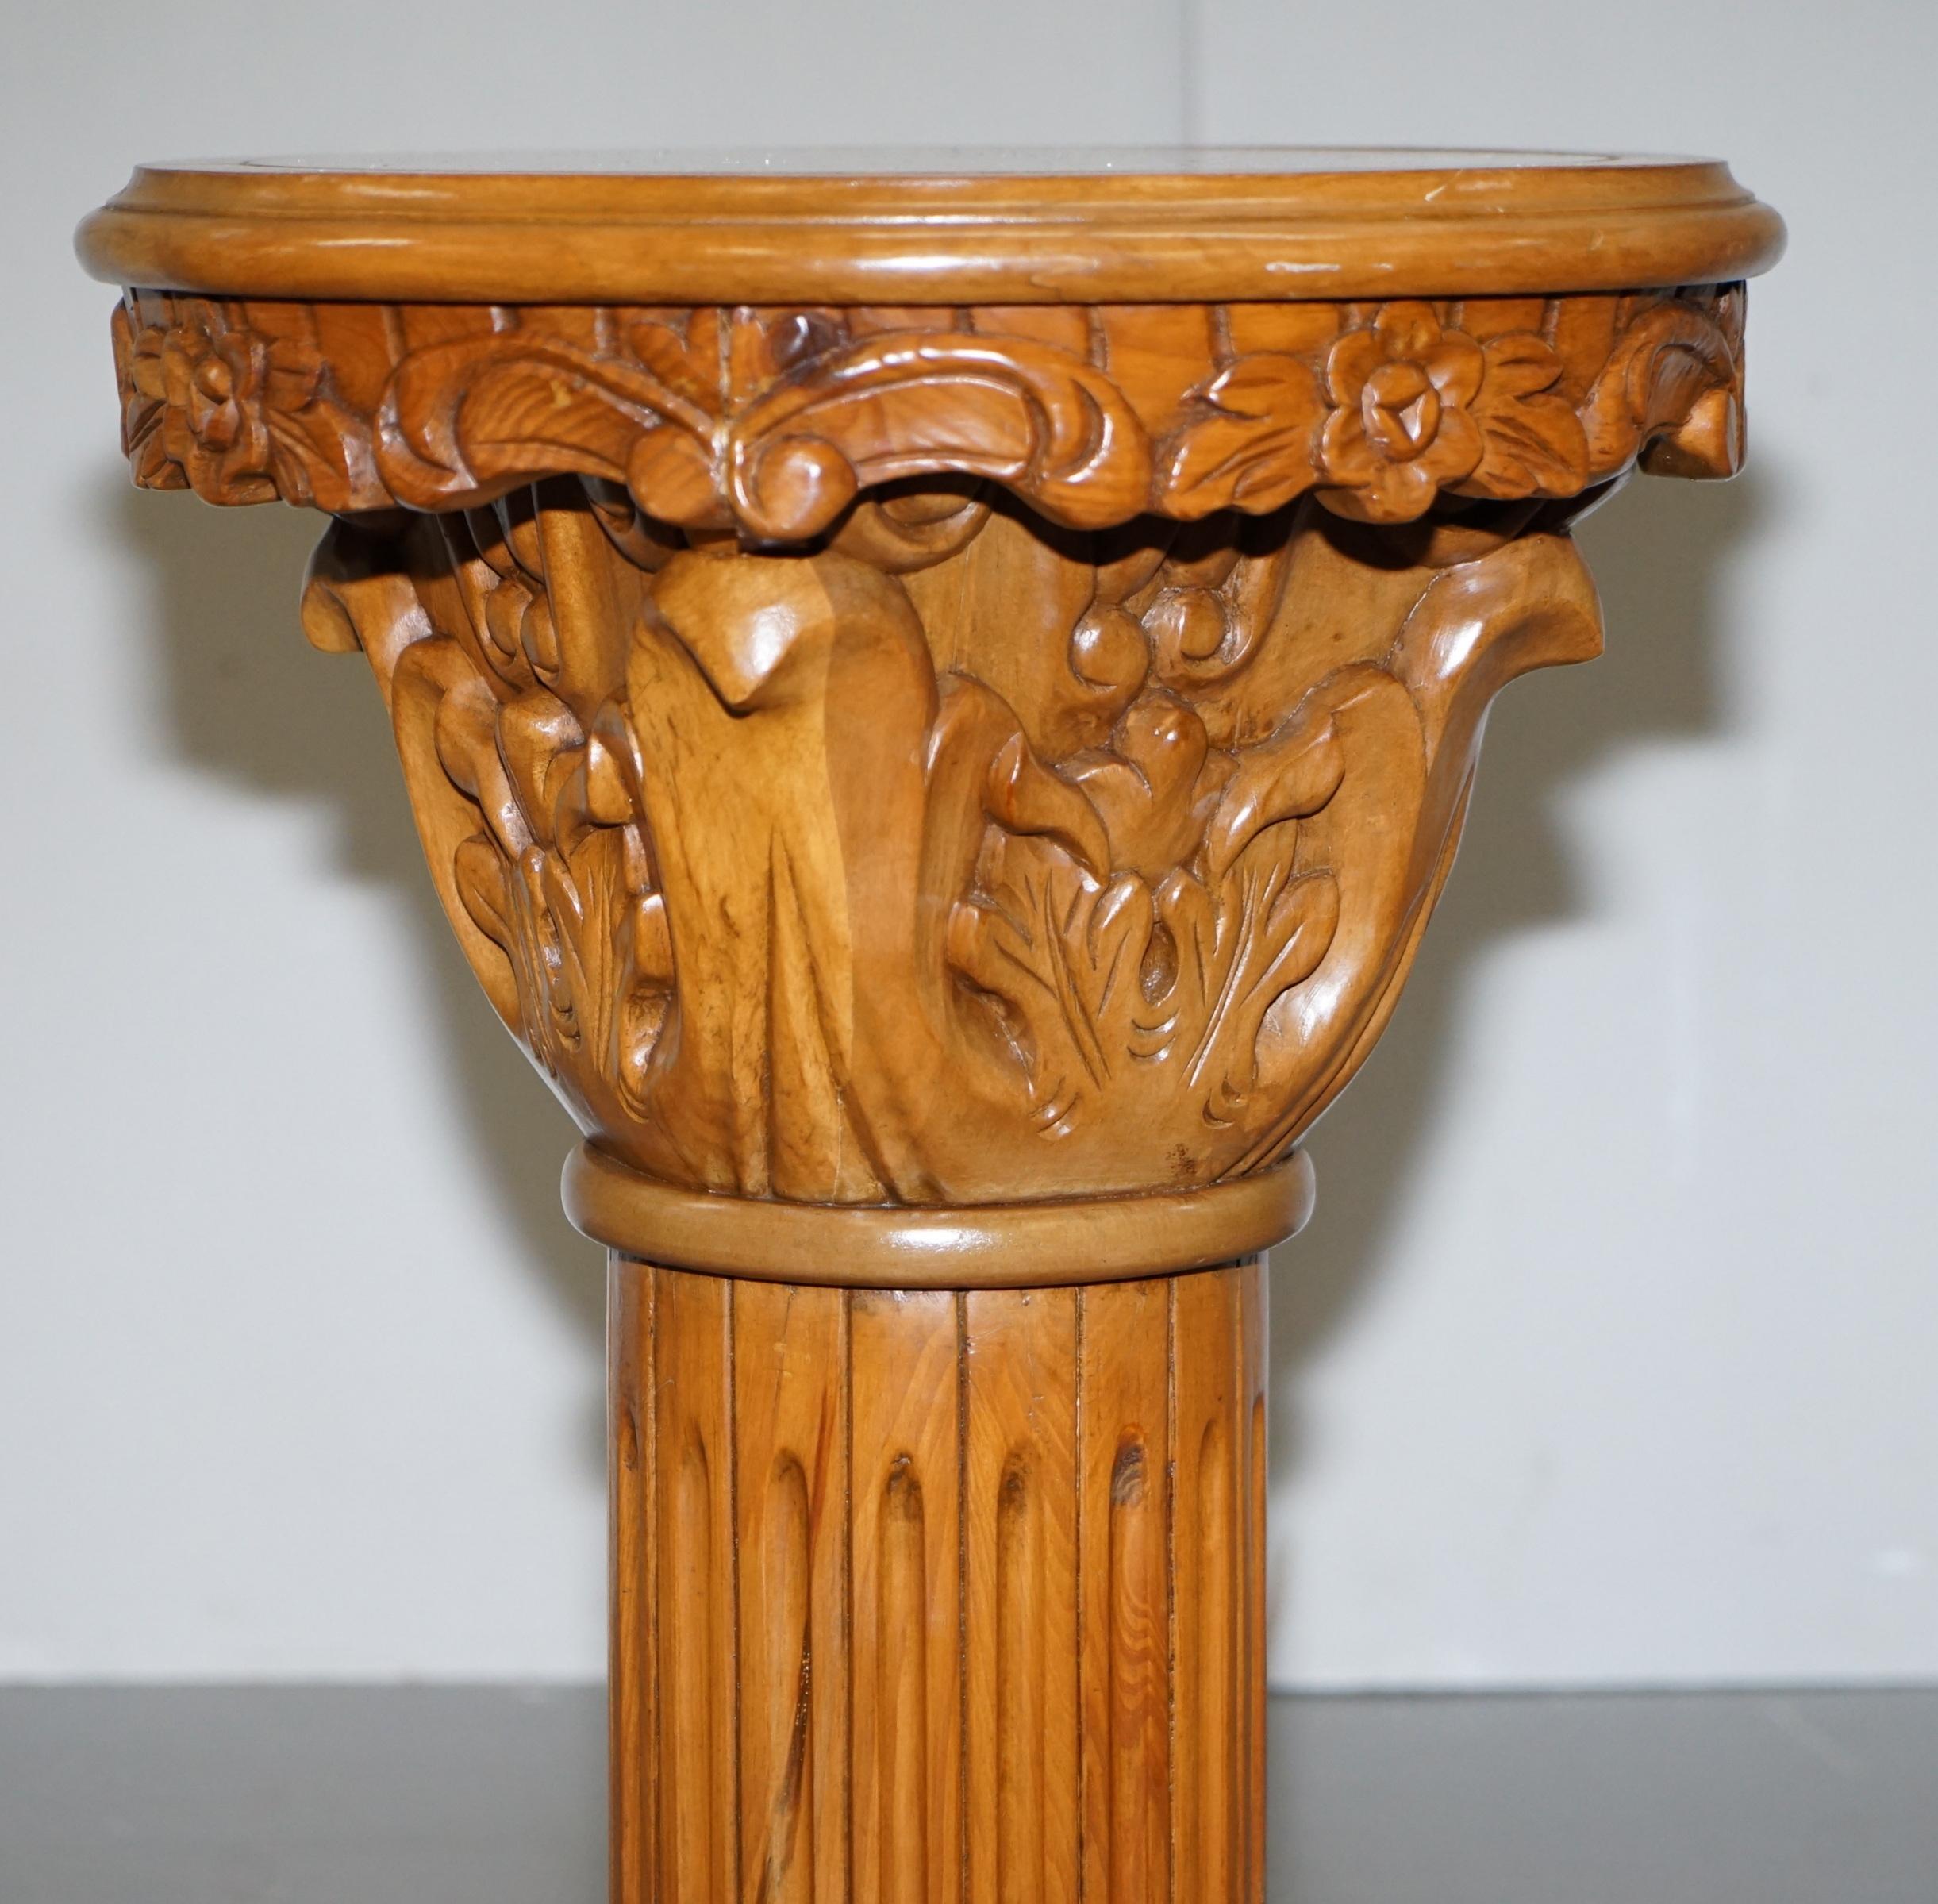 20th Century Side Table Sized Corithian Pillar Jardiniere in Hardwood with Italian Marble Top